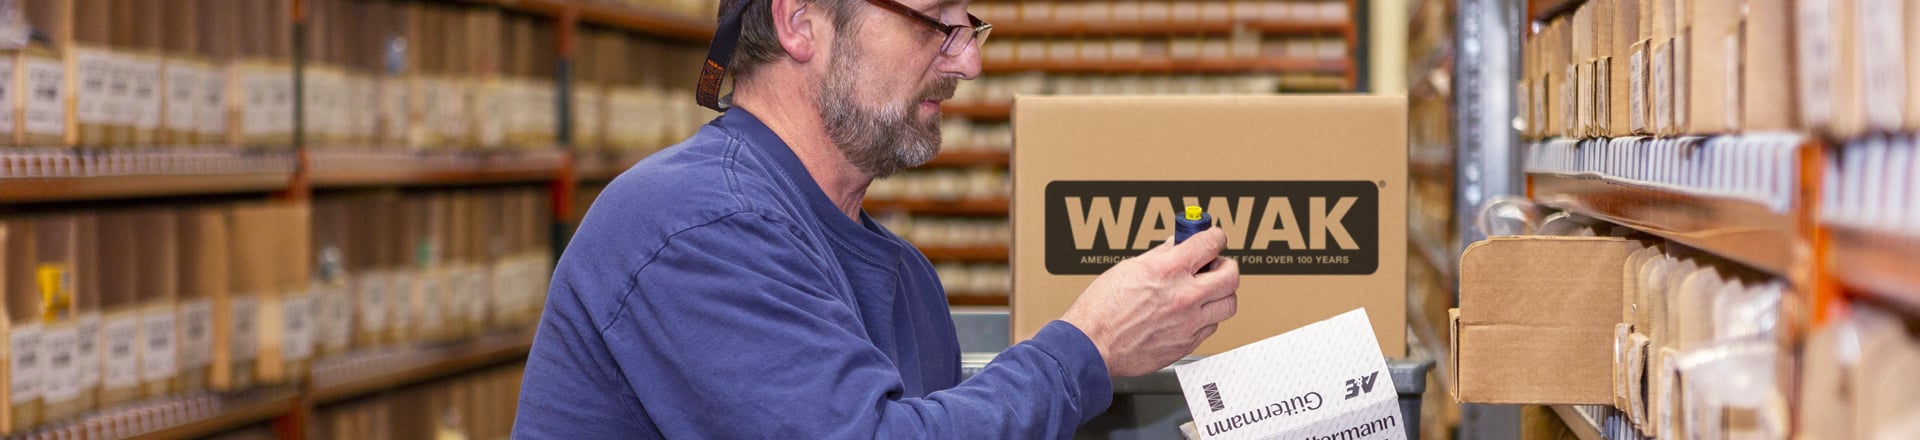 WAWAK Sewing Supplies Warehouse Gutermann Thread Order Being Picked By Employee